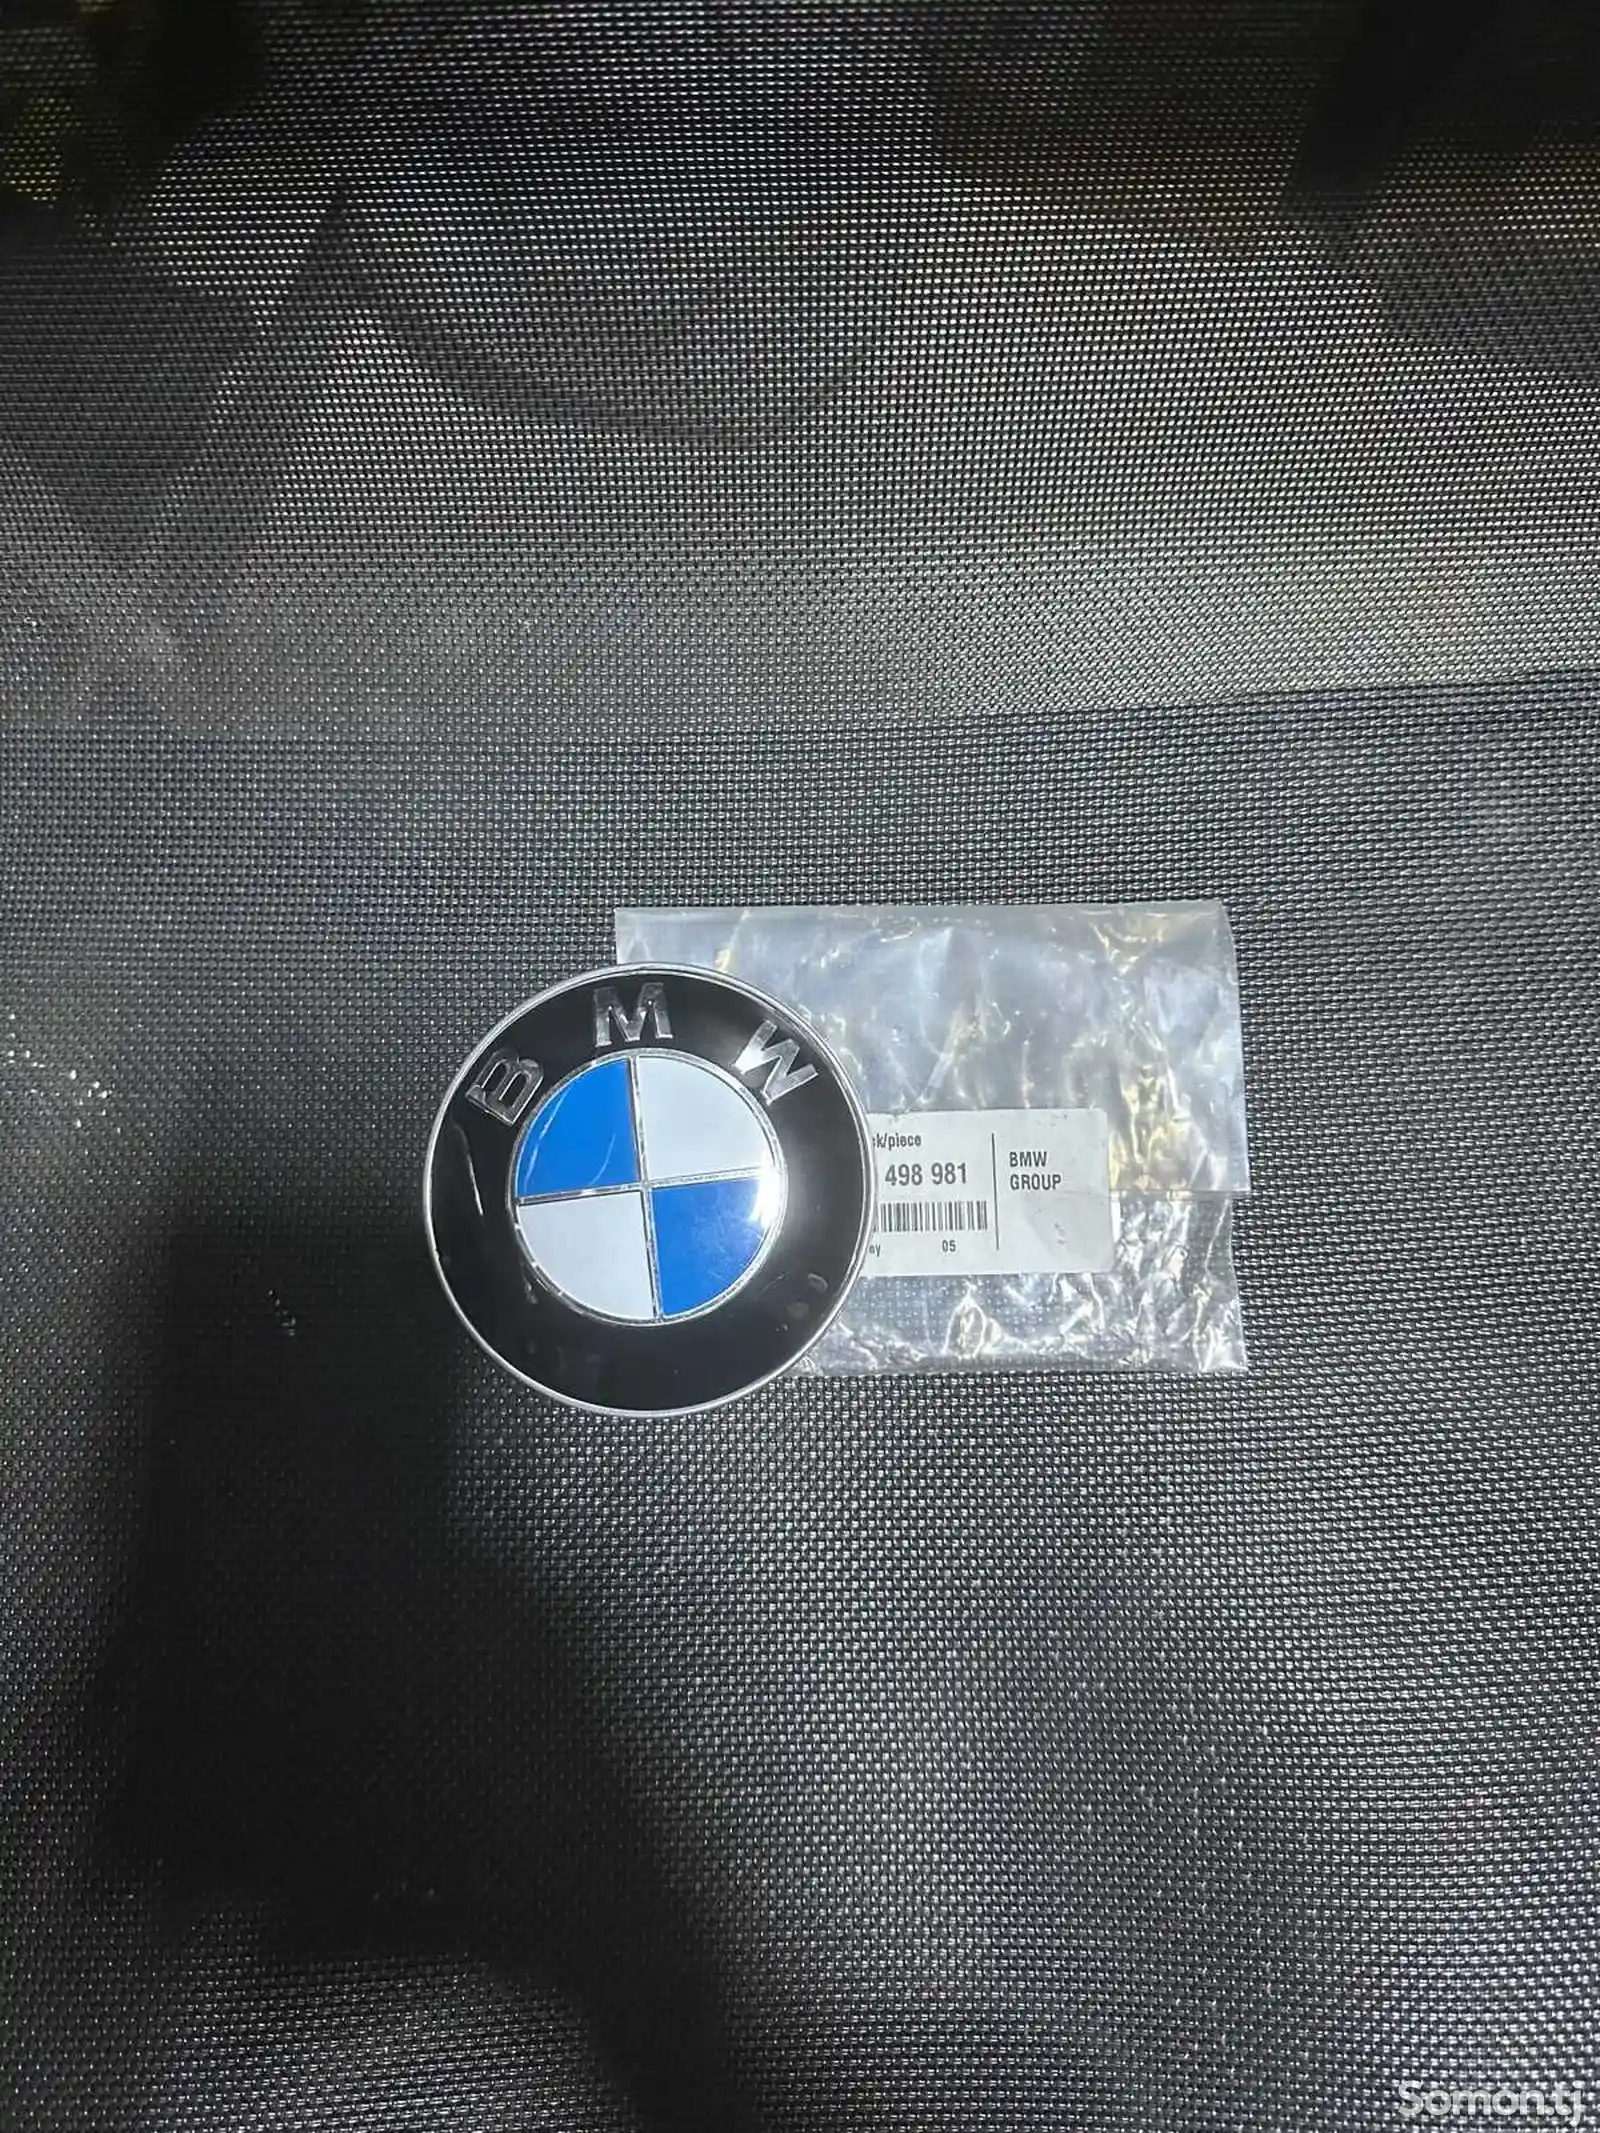 Знак BMW G 12-2